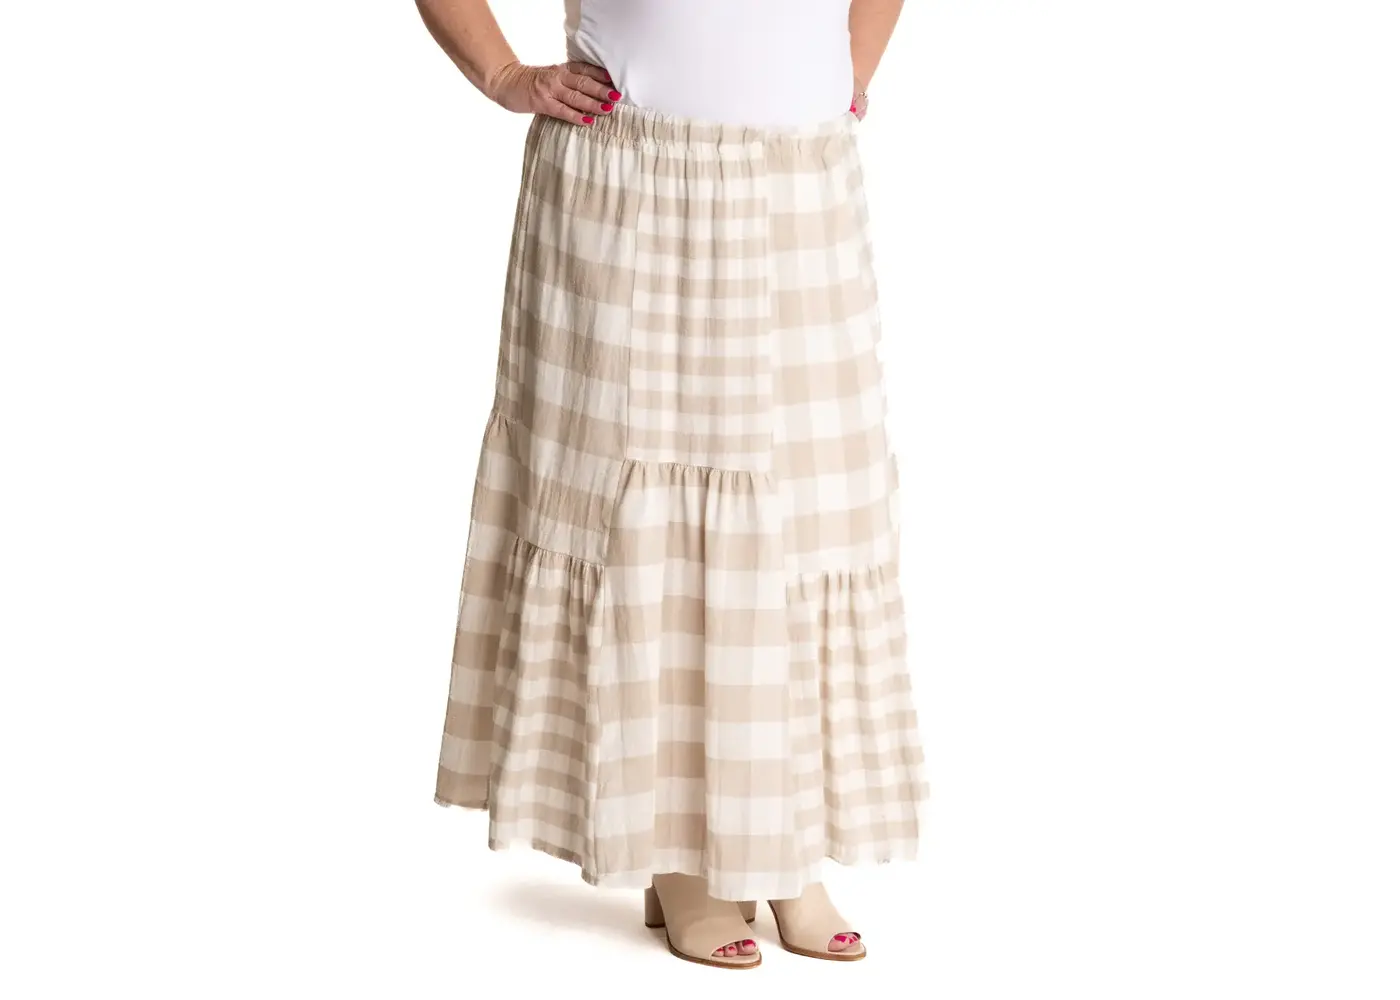 Imagine Fashion Isabella Skirt in Latte